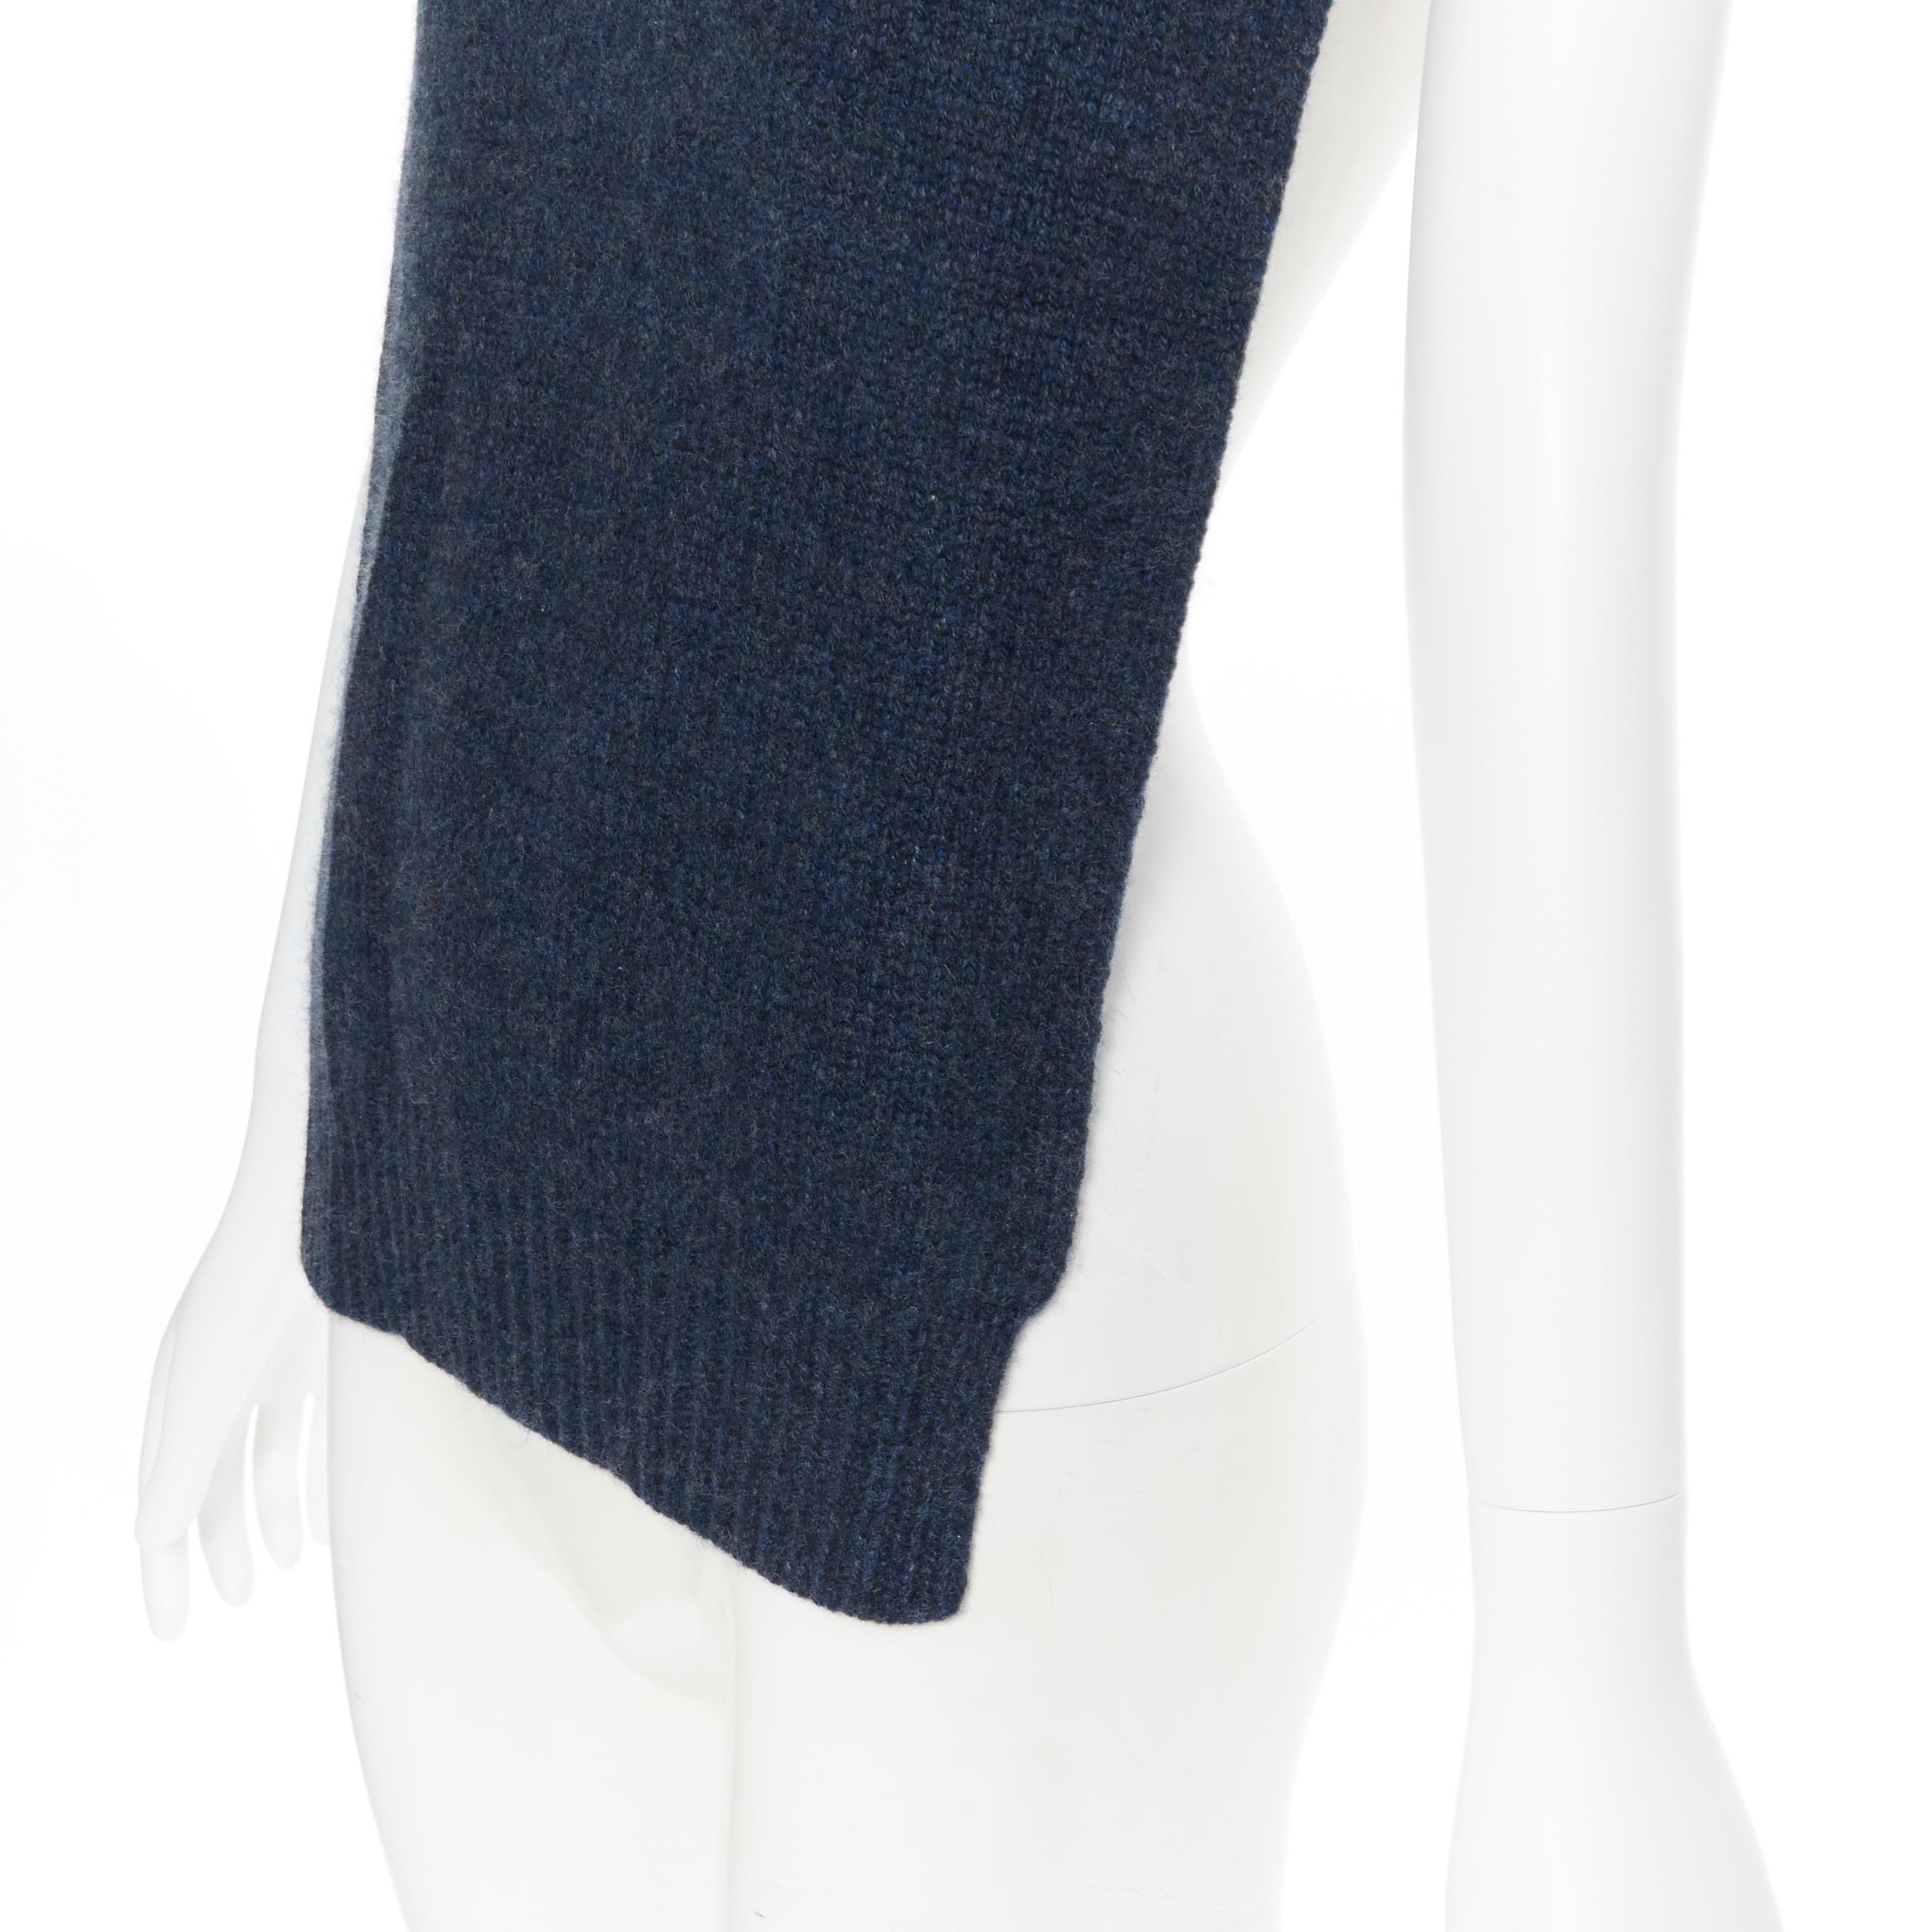 Women's OLD CELINE PHOEBE PHILO 100% cashmere  blue turtleneck dickie scarf neckwarmer